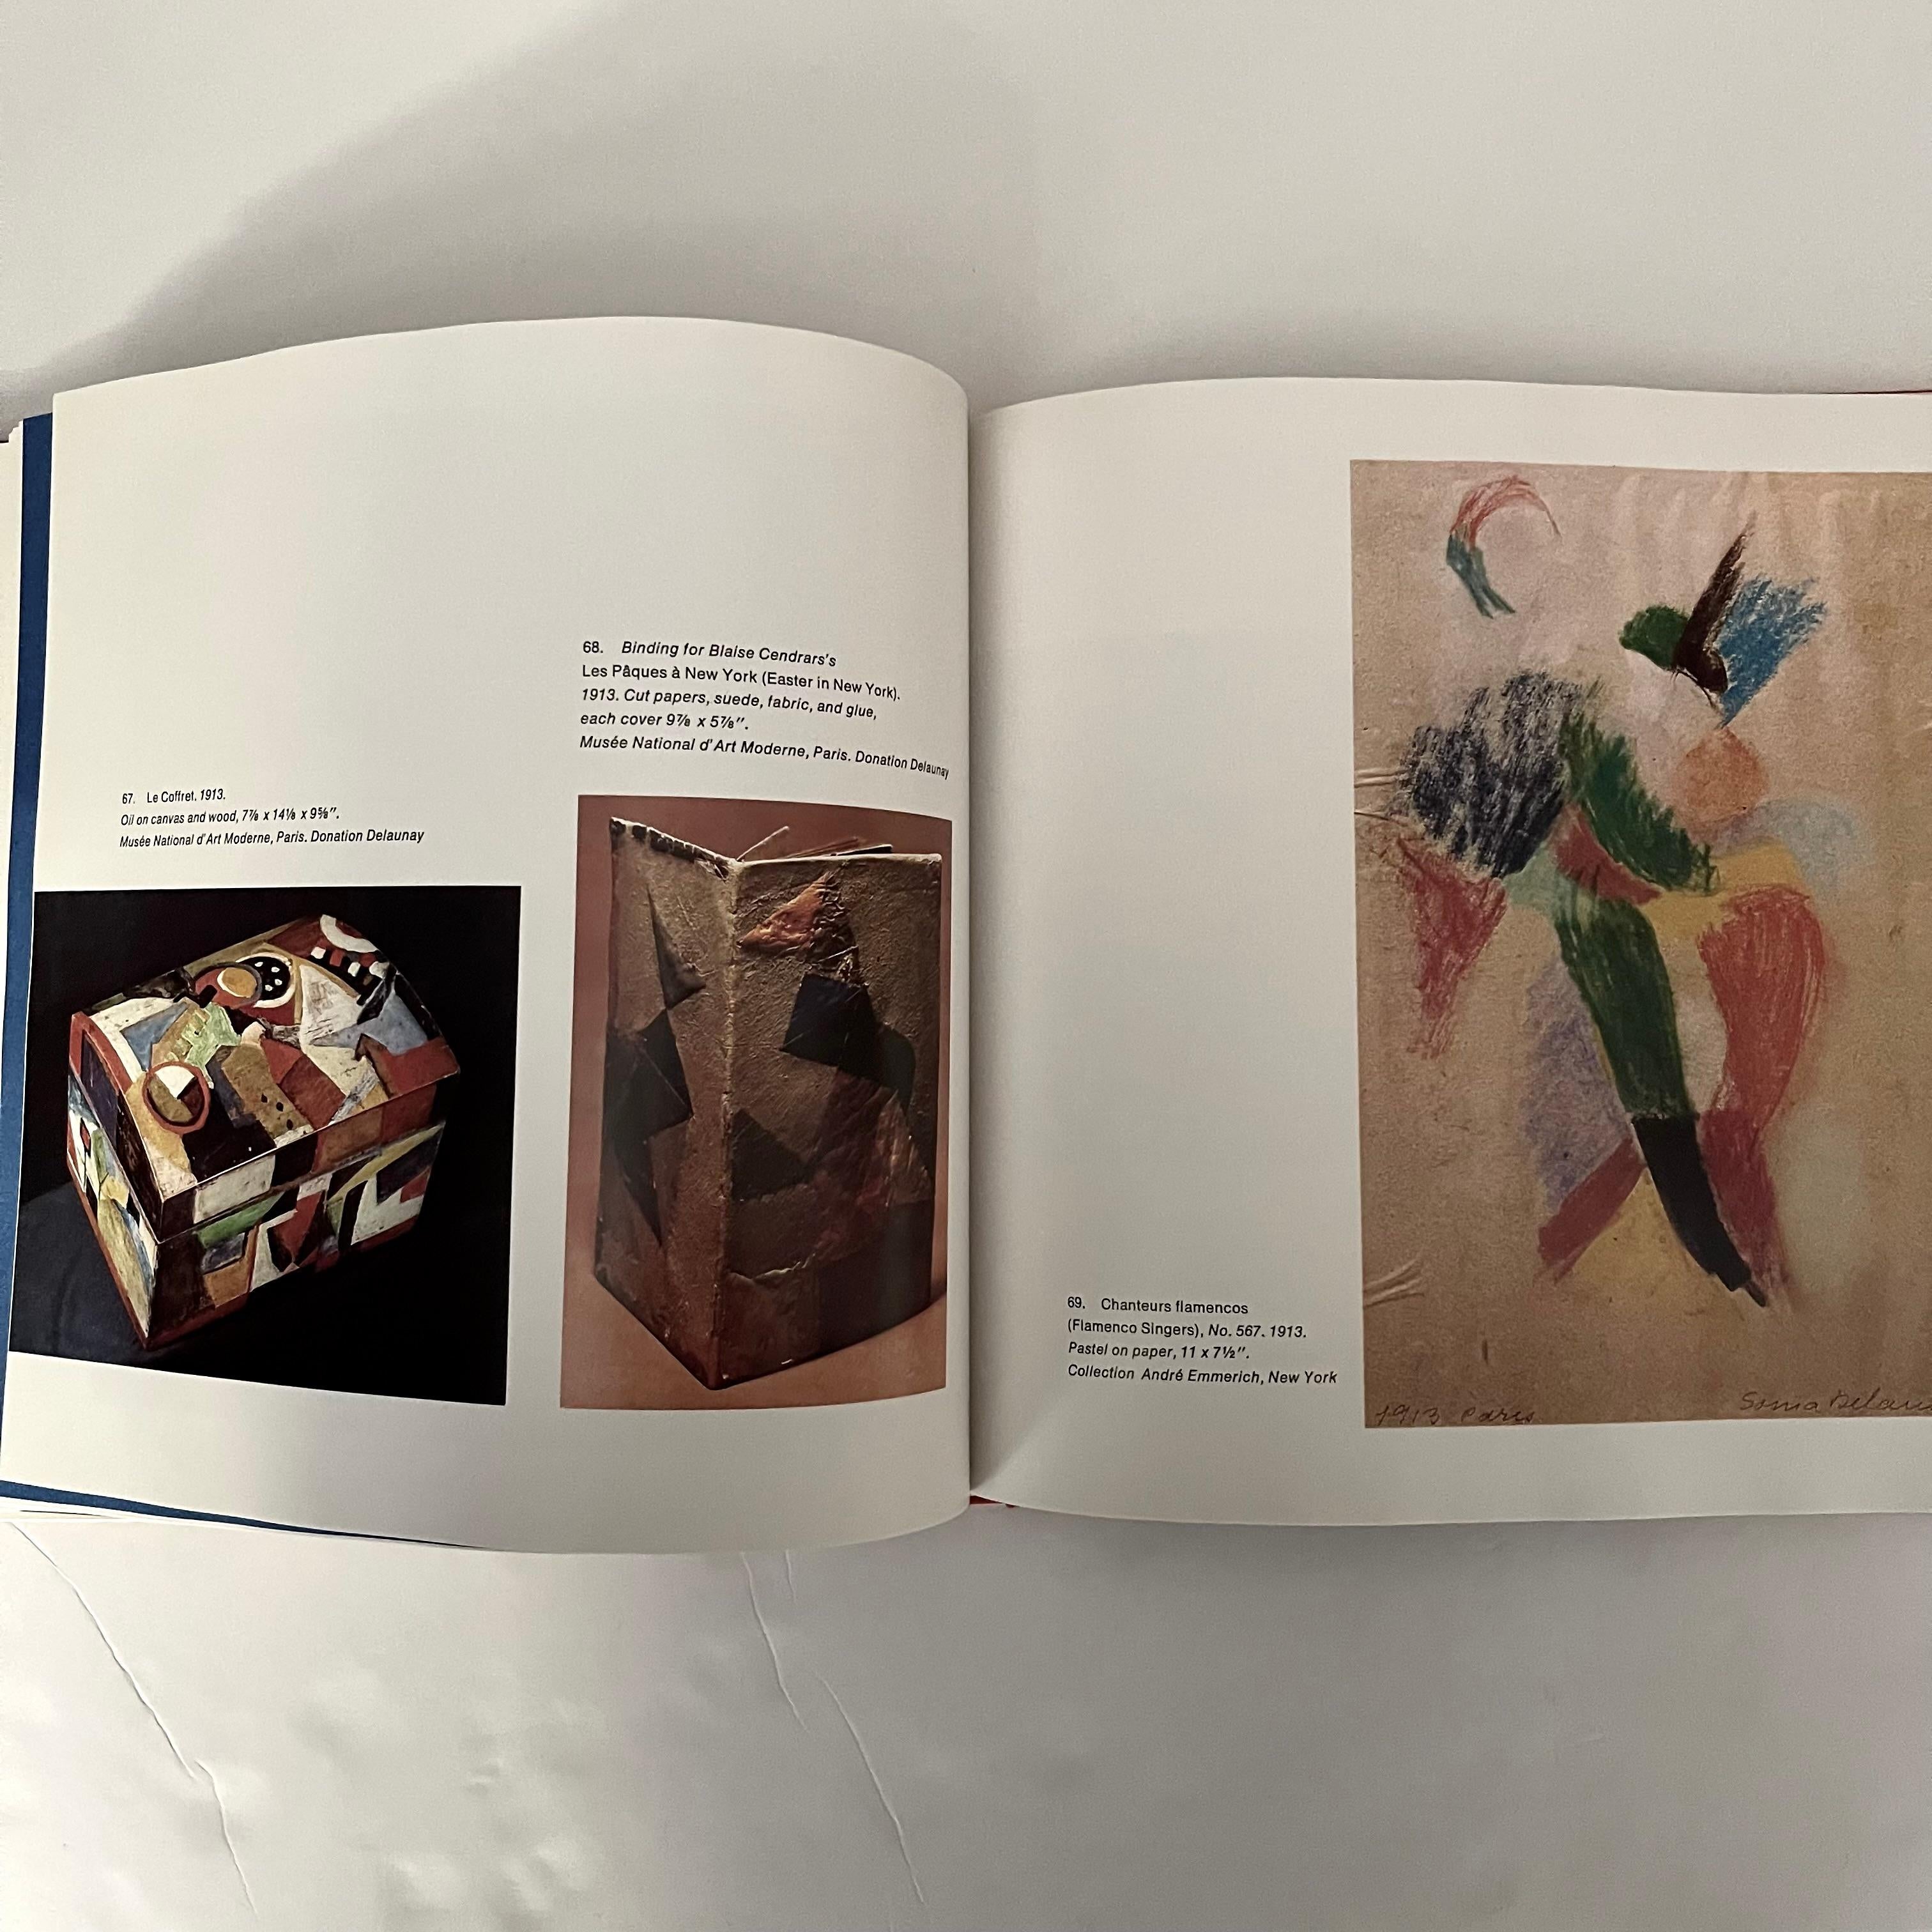 Paper Sonia Delaunay - Arthur A. Cohen - New York, 1988